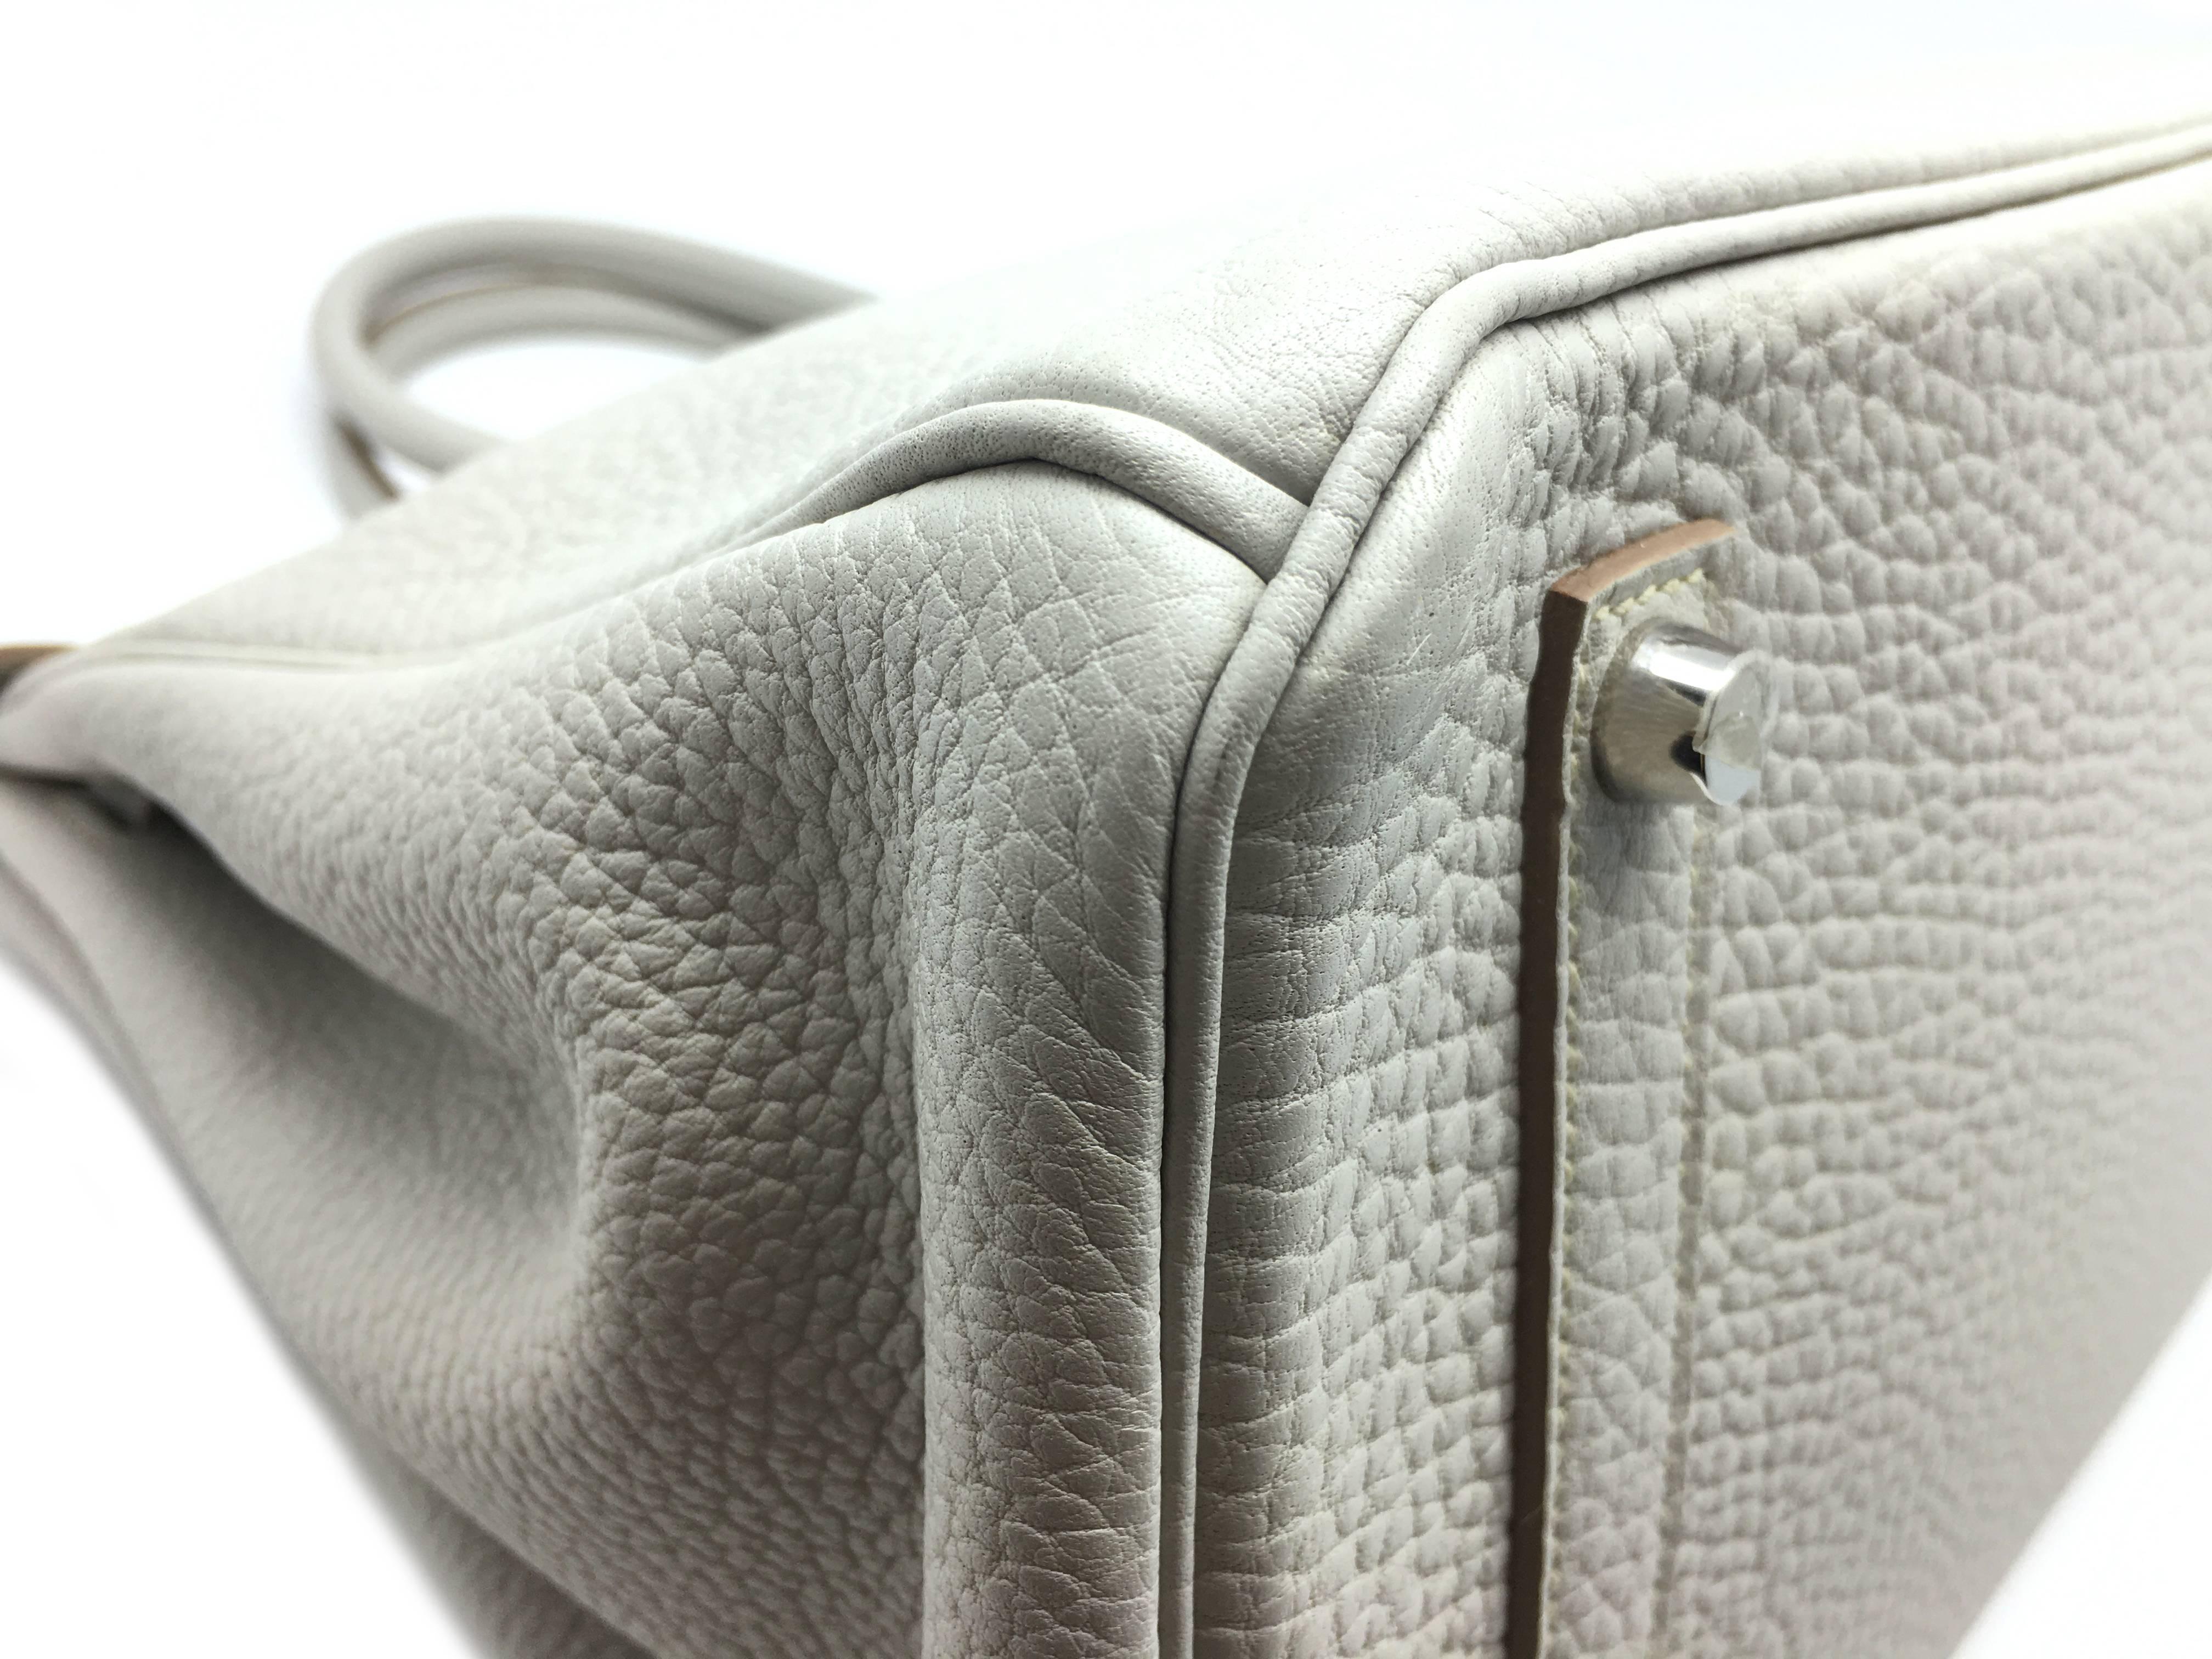 Women's Hermes Birkin 35 Gris Perle Togo Leather SHW Top Handle Bag